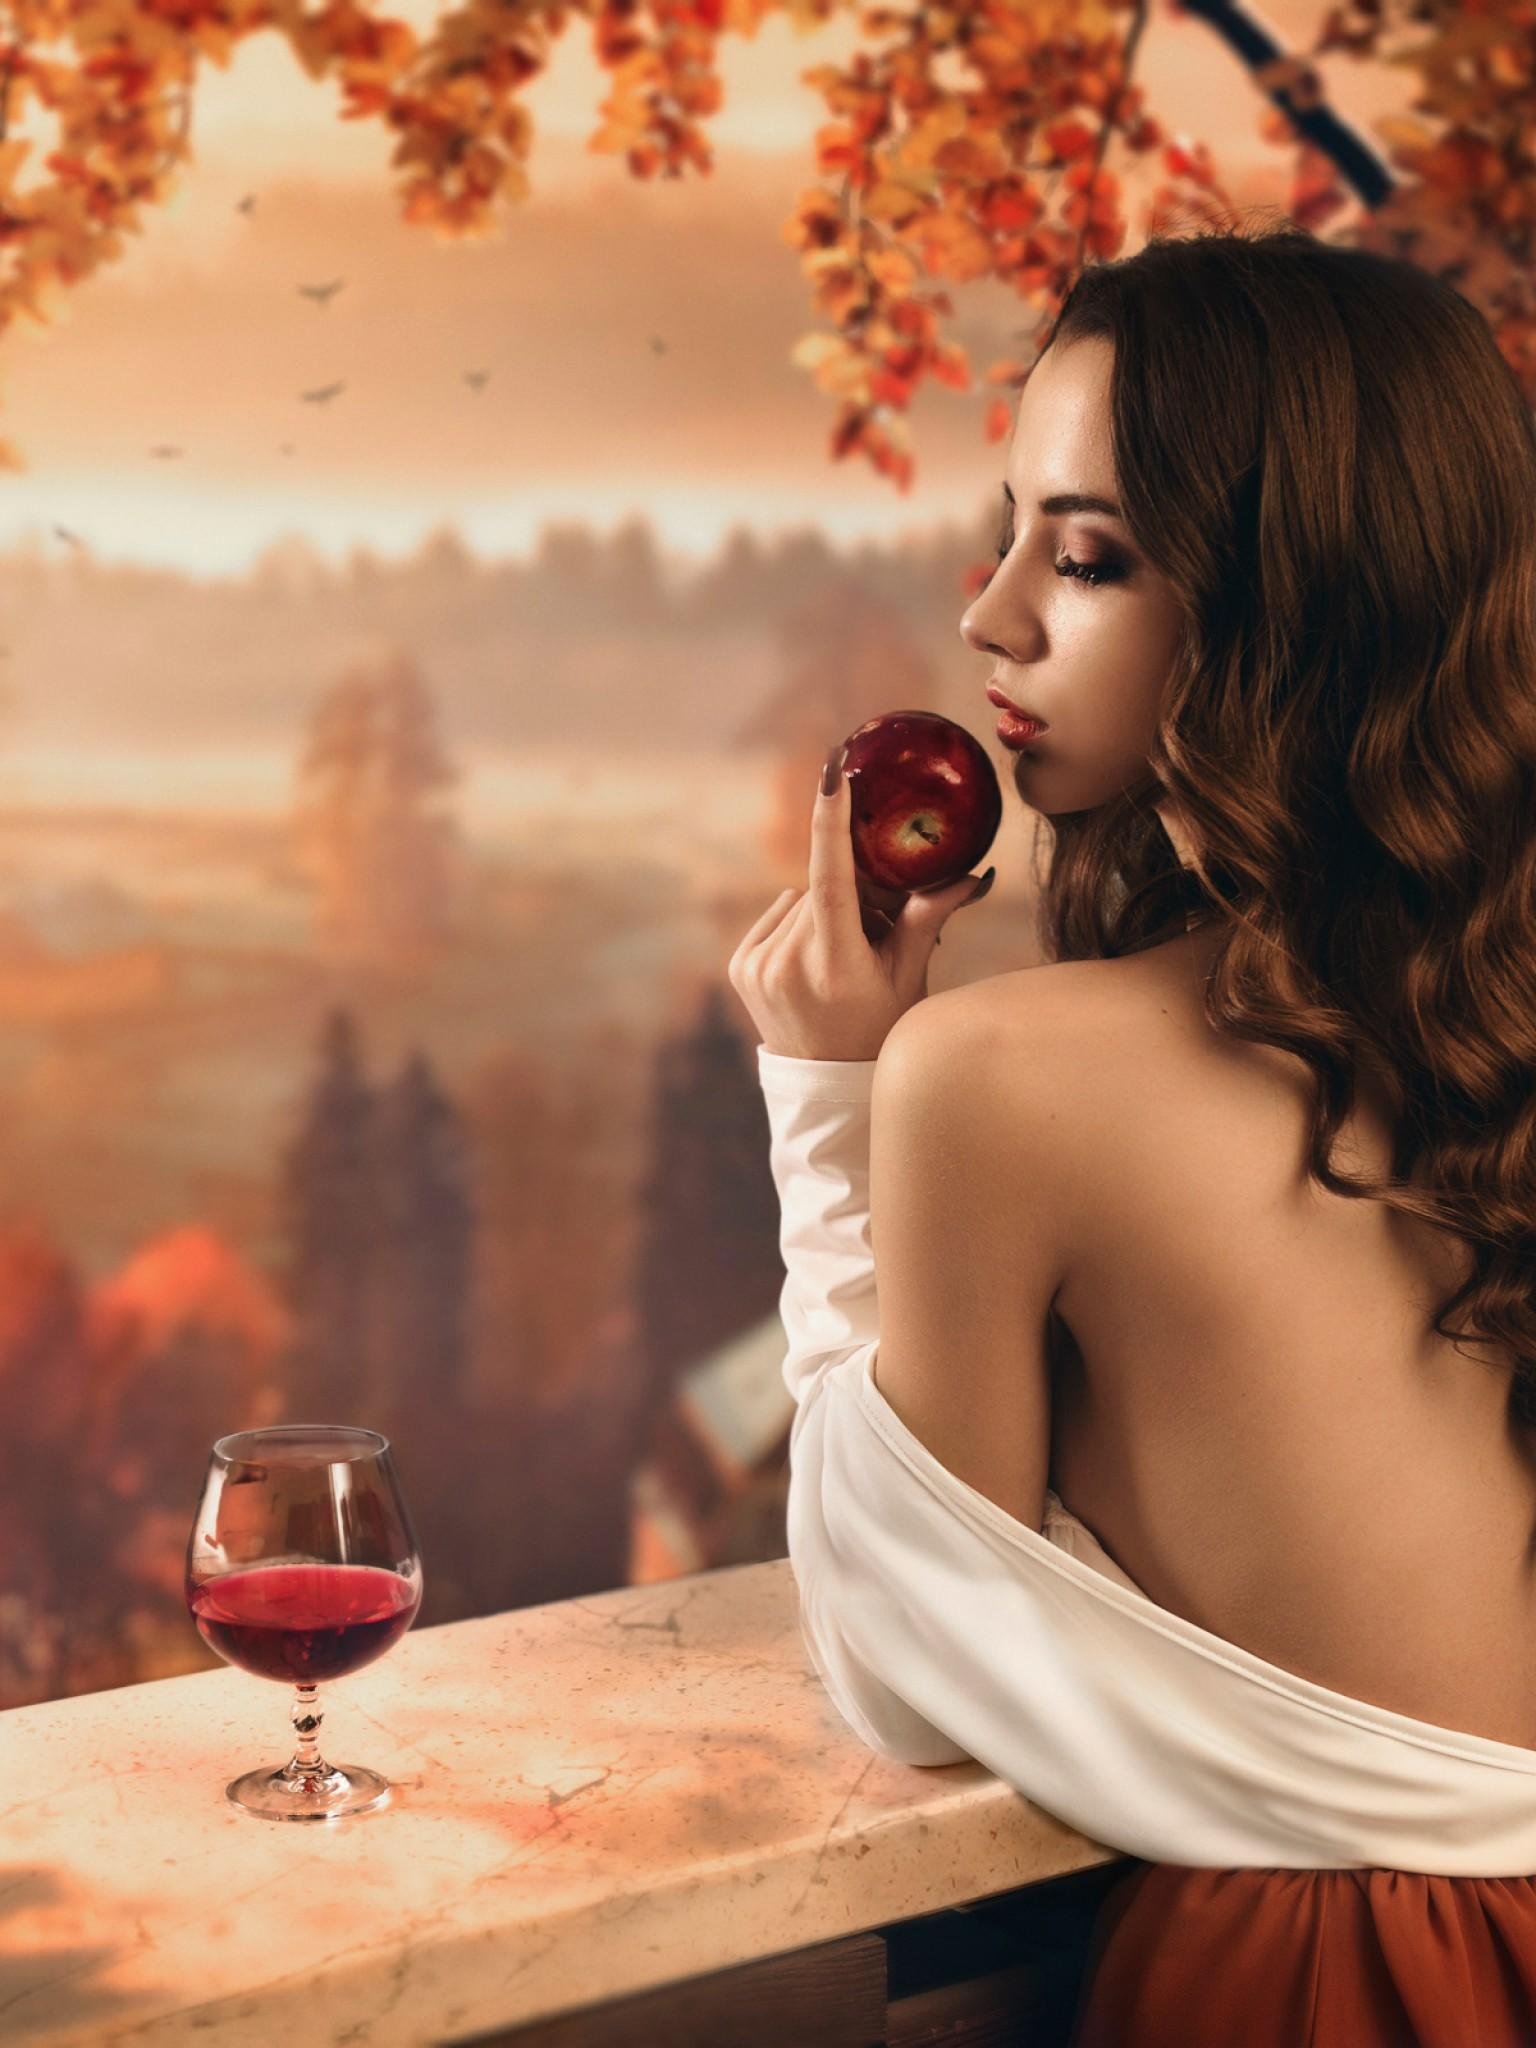 Фото с бокалом вина на природе девушки